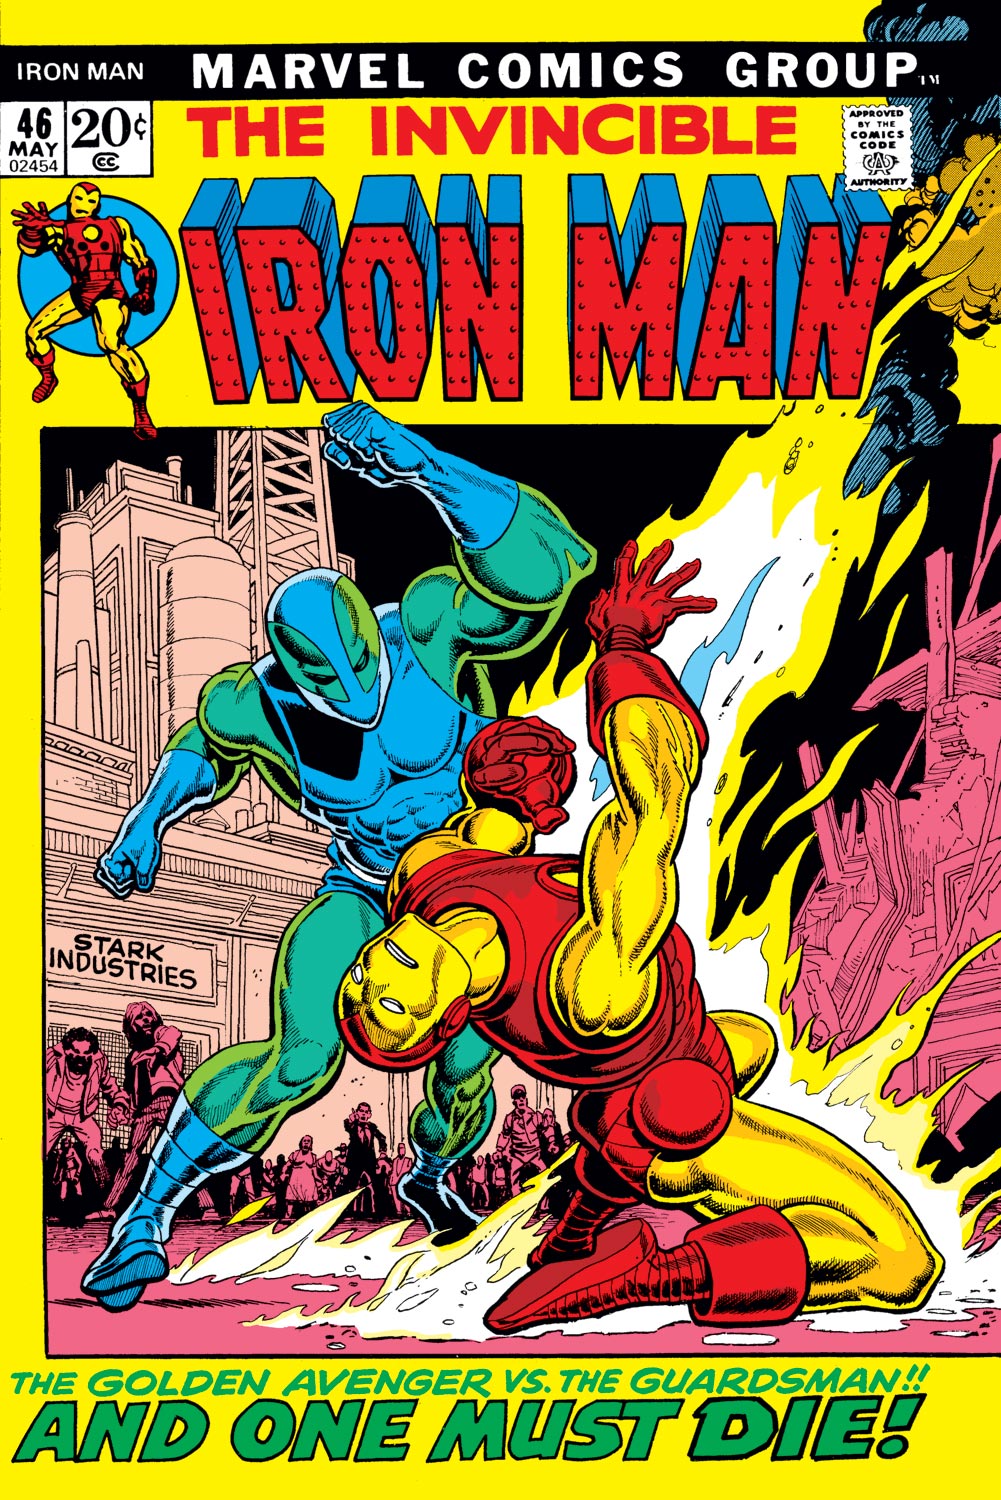 Iron Man (1968) #46